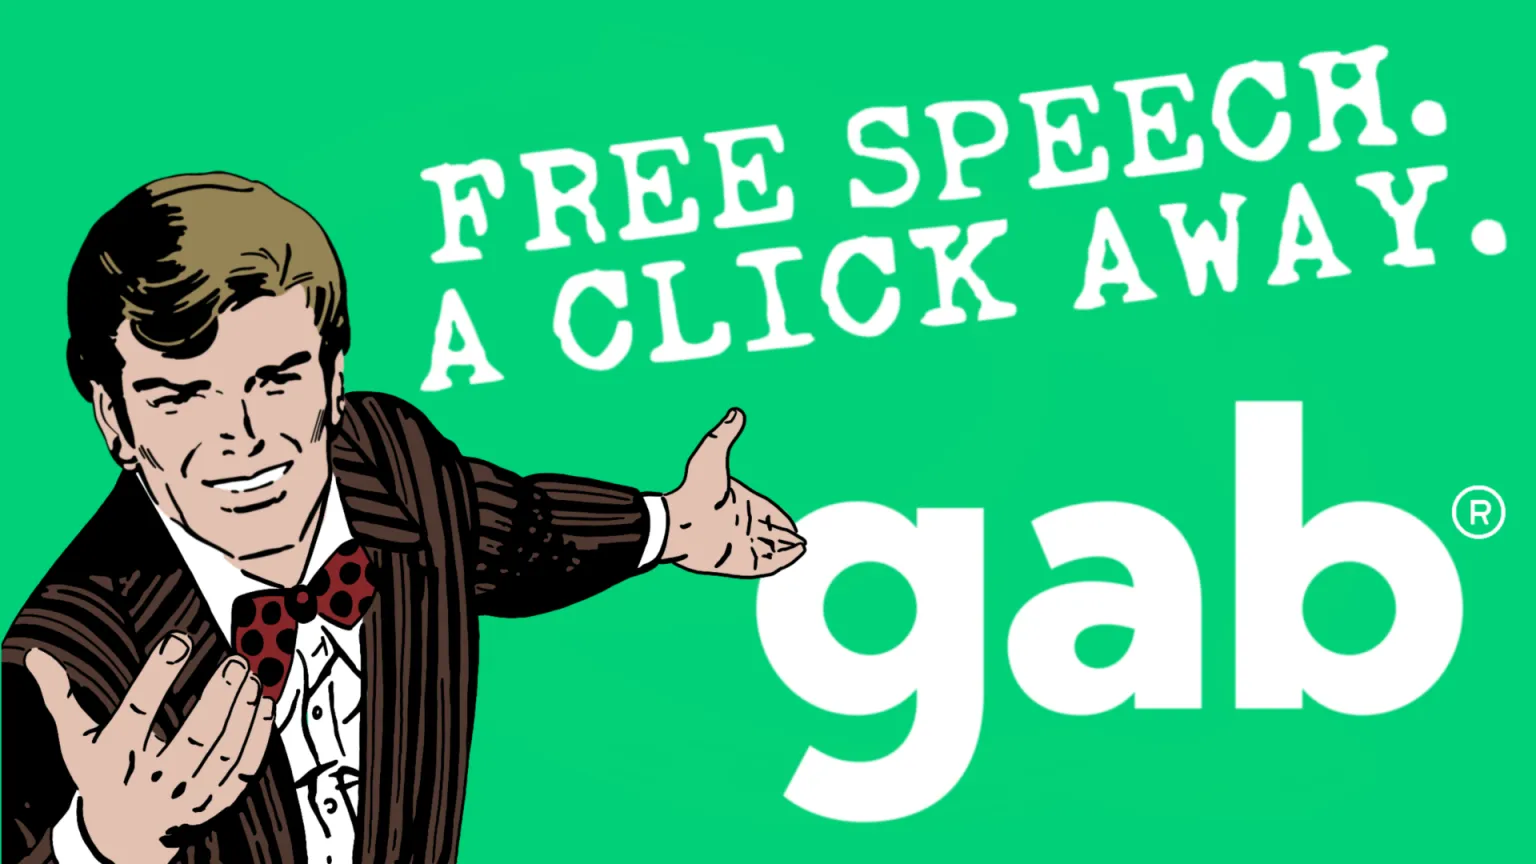 Gab offers free speech